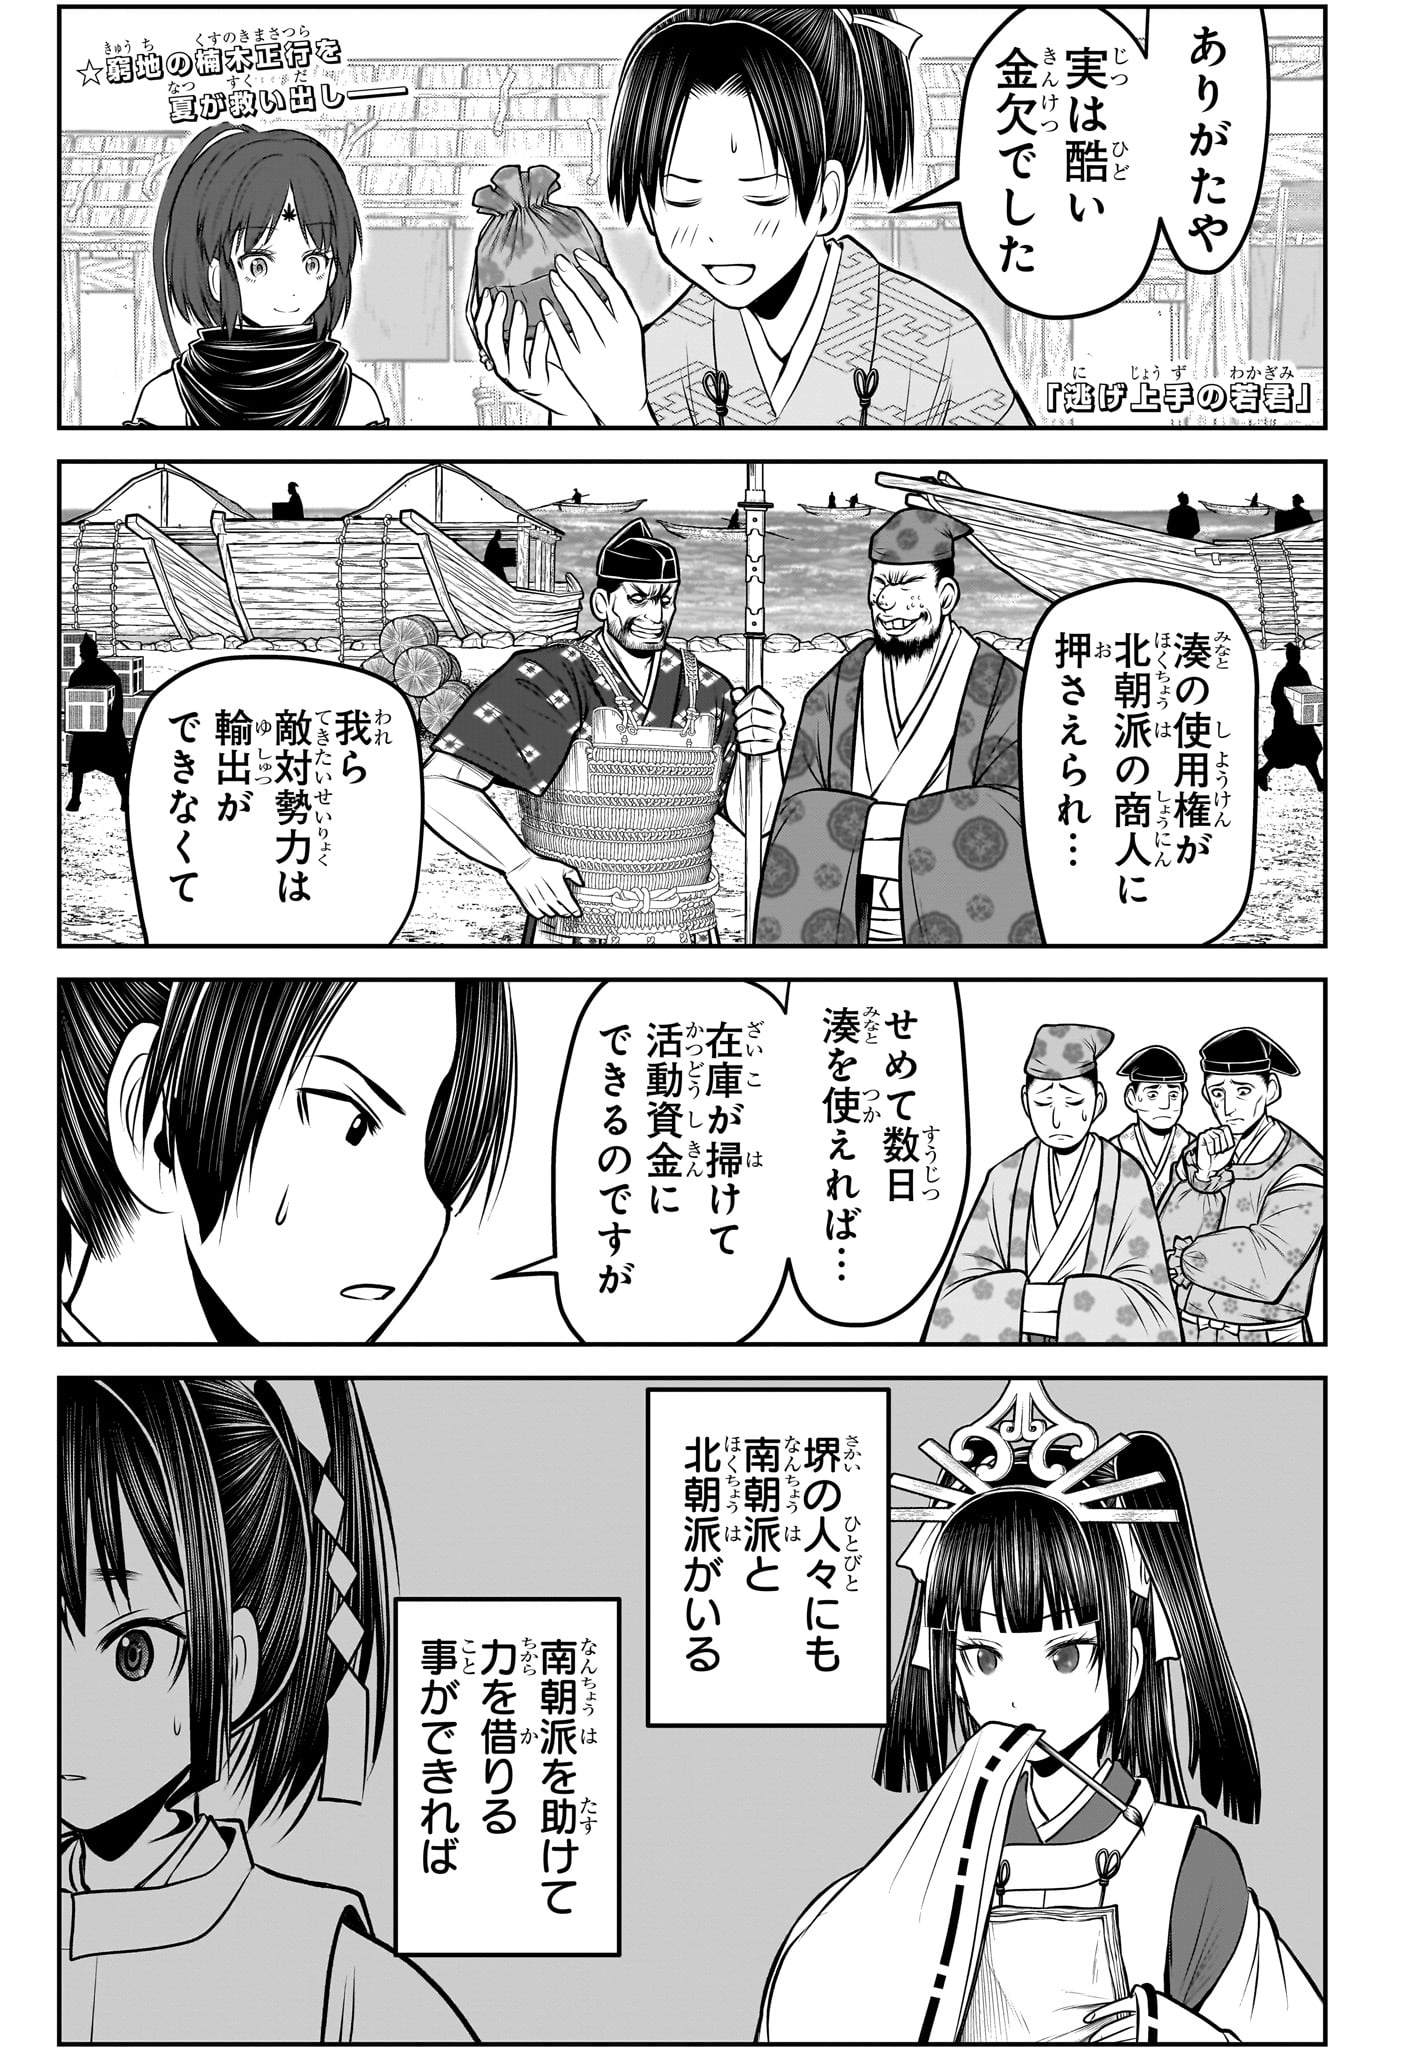 Nige Jouzu no Wakagimi - Chapter 155 - Page 1